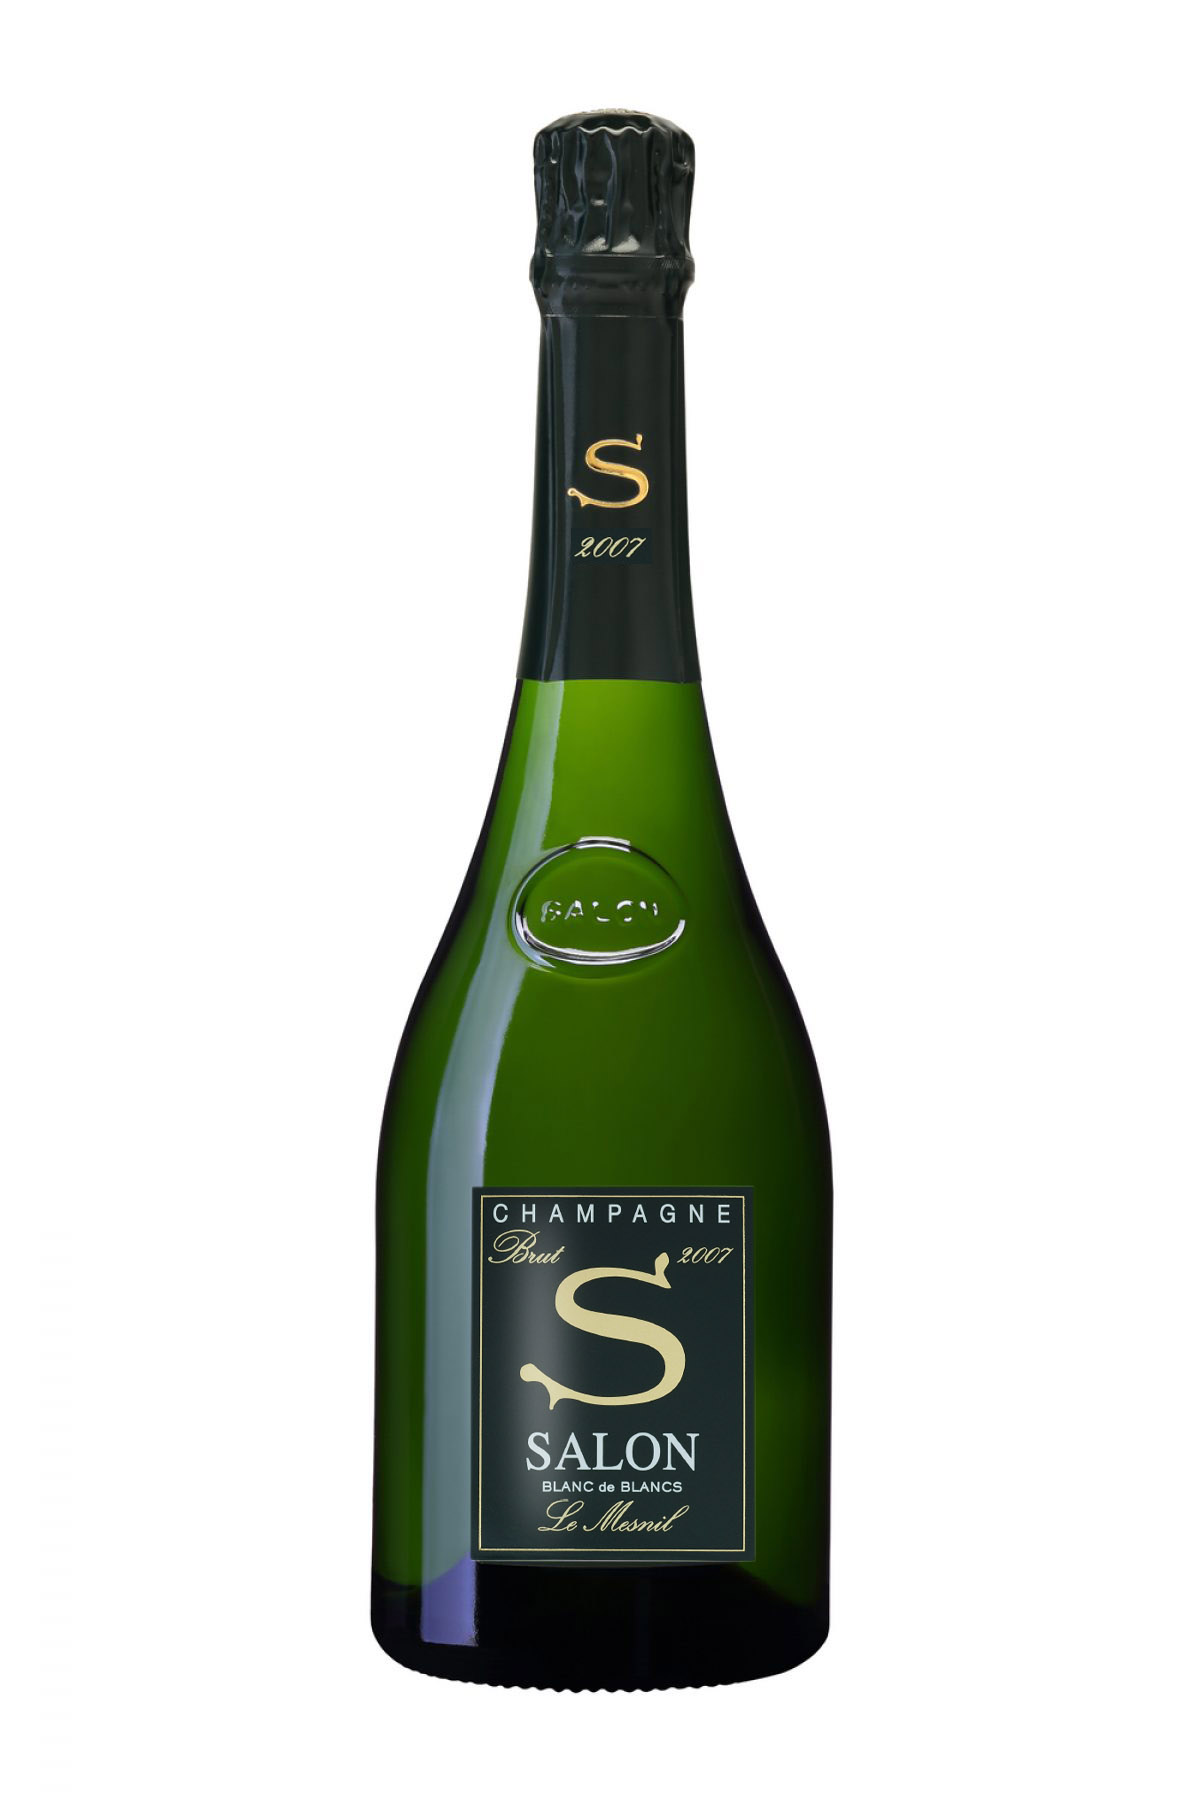 Champagne S de Salon 2007 